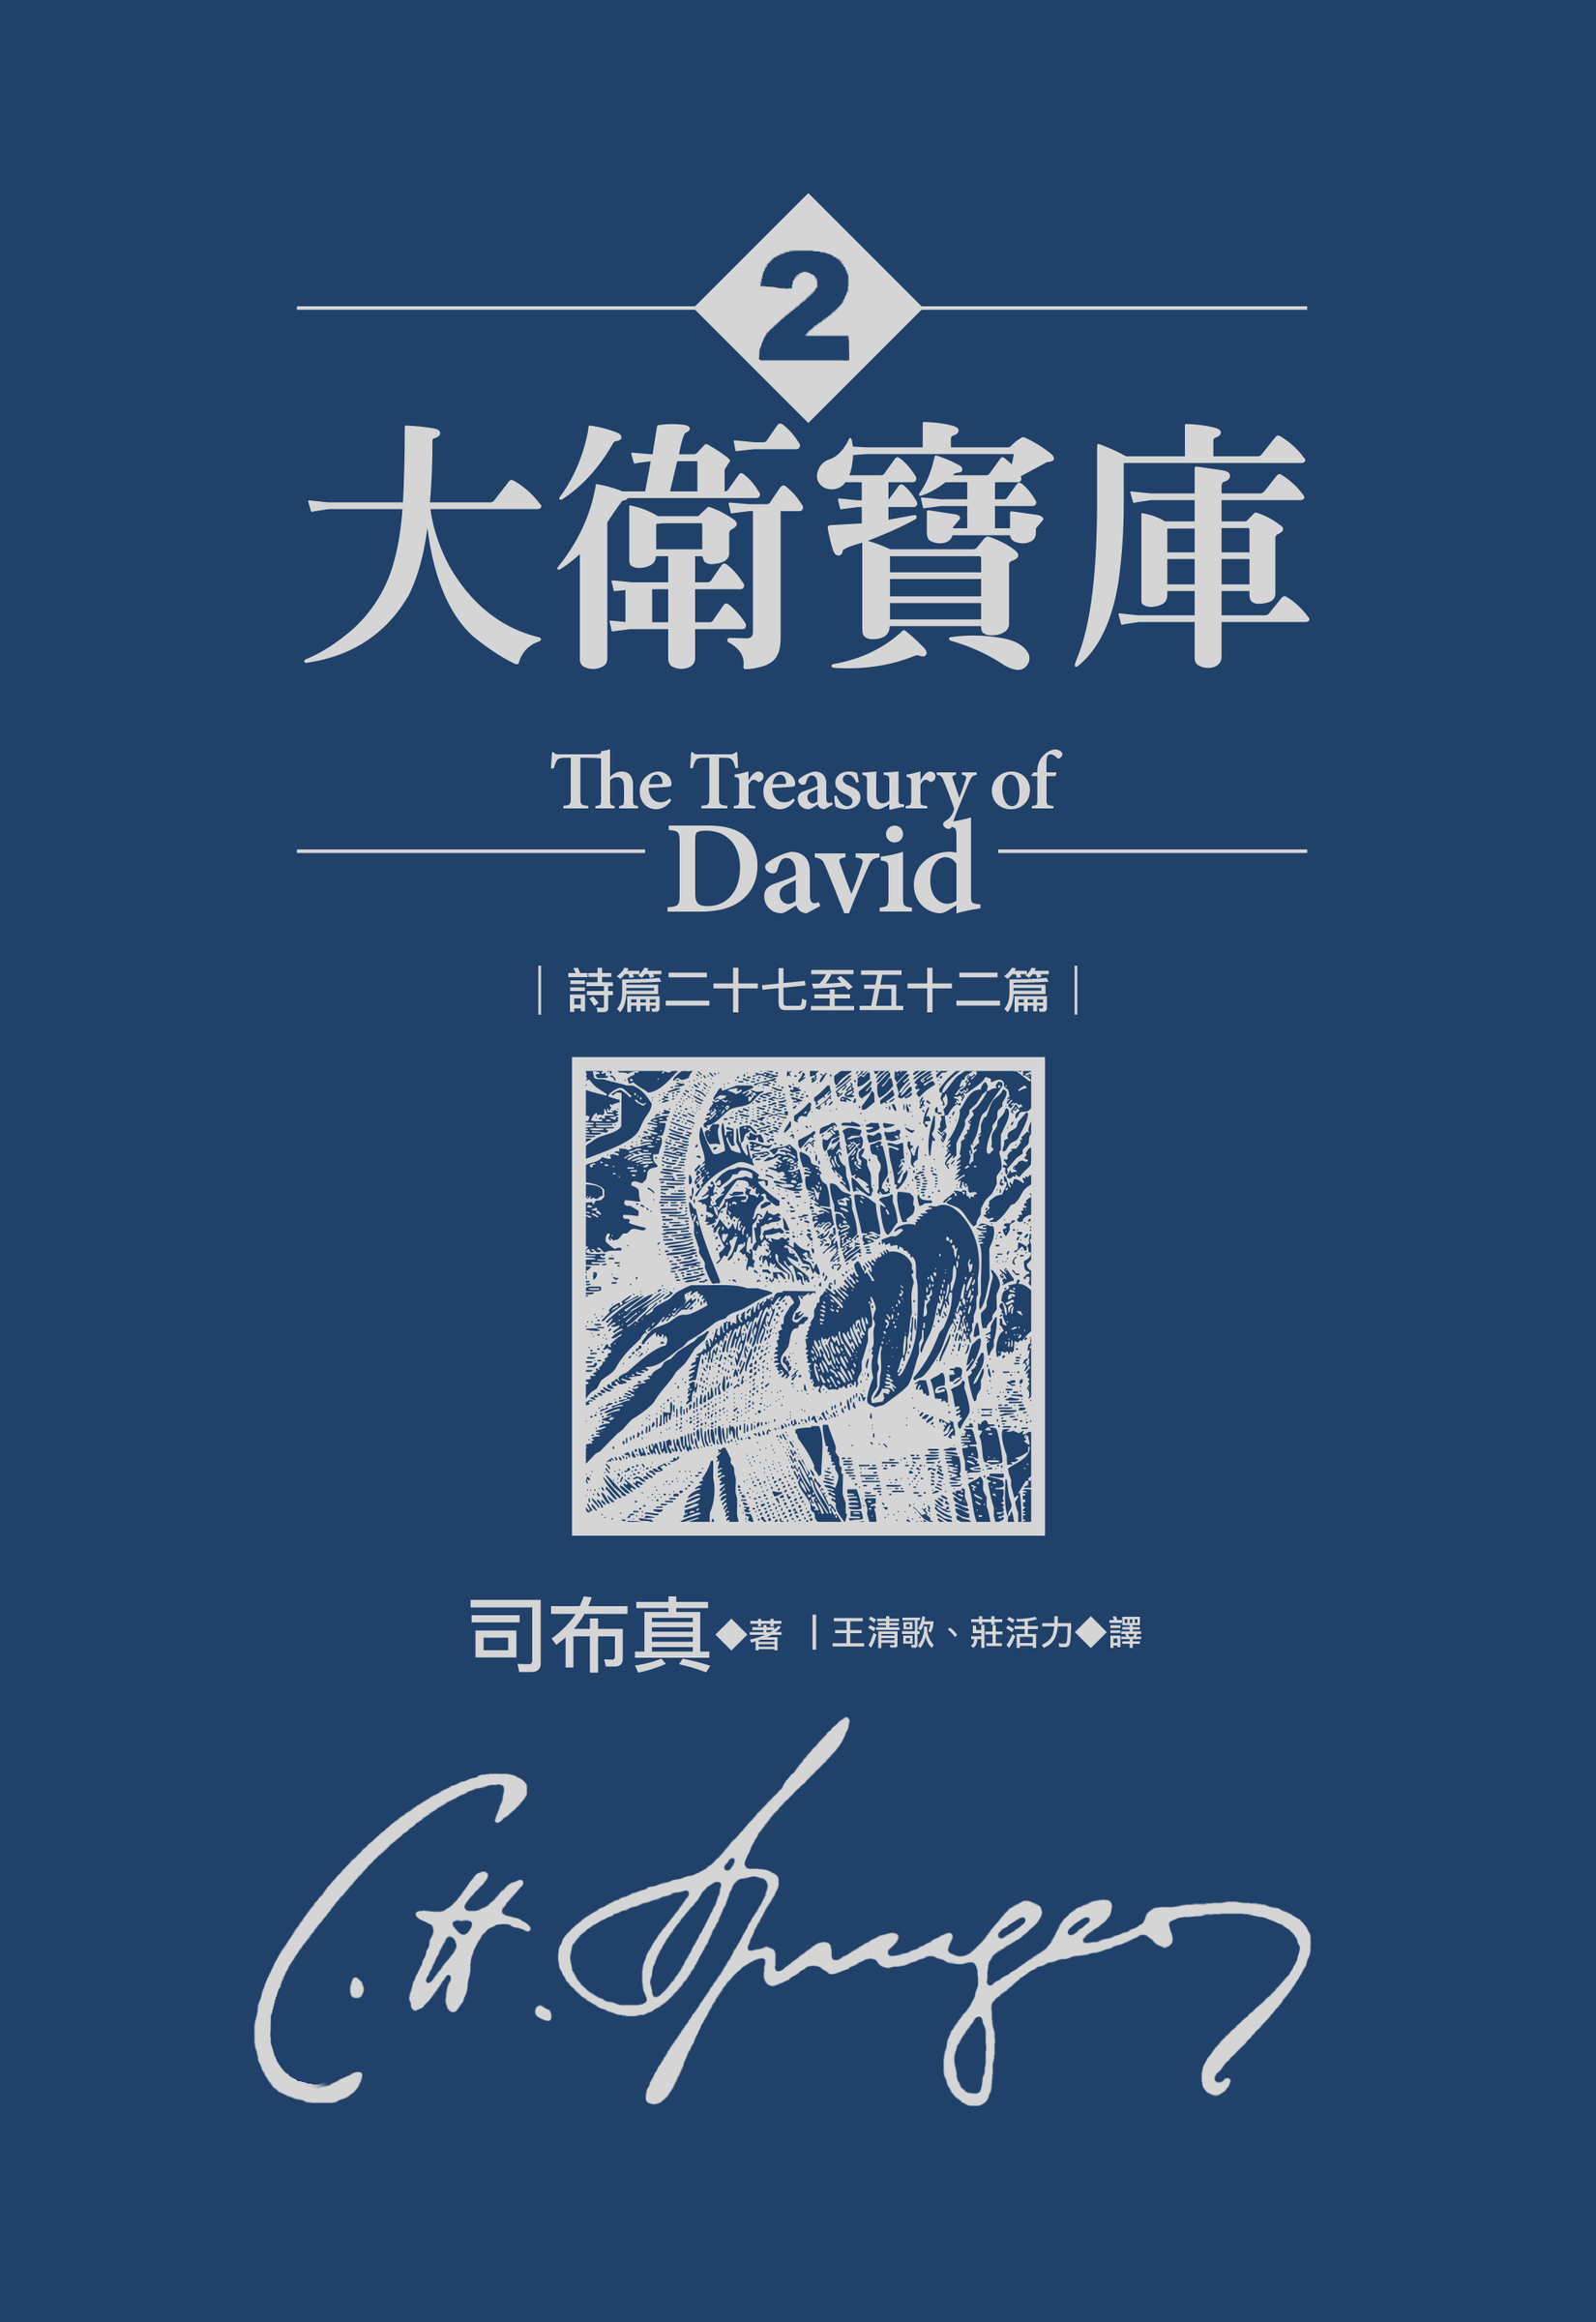 Treasure of David 2 COVER